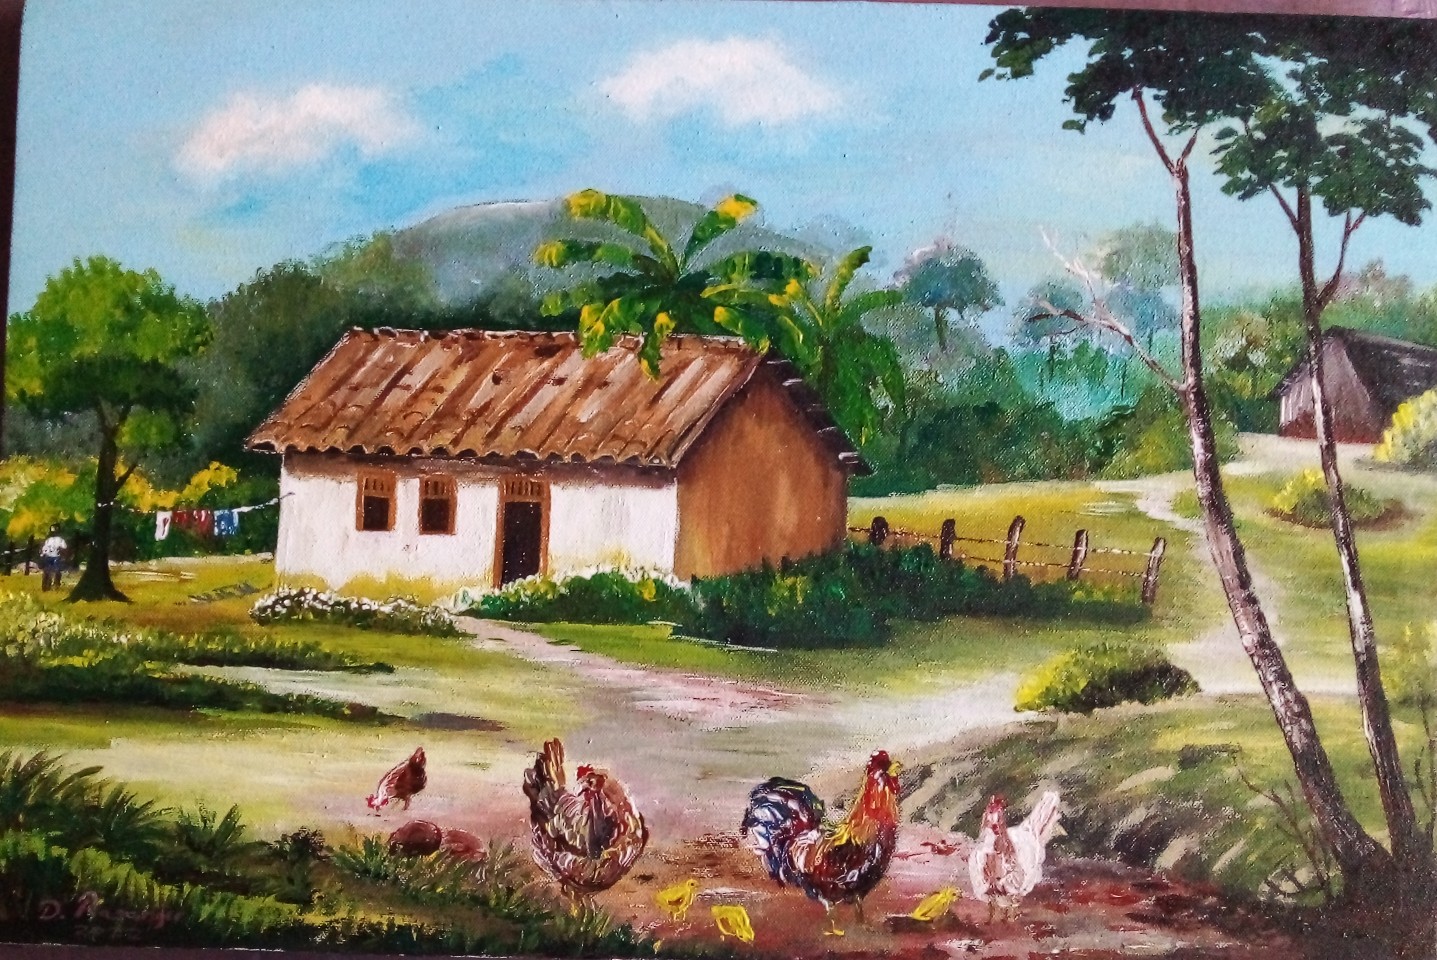 Village 3 by Dhamitha Rasangee